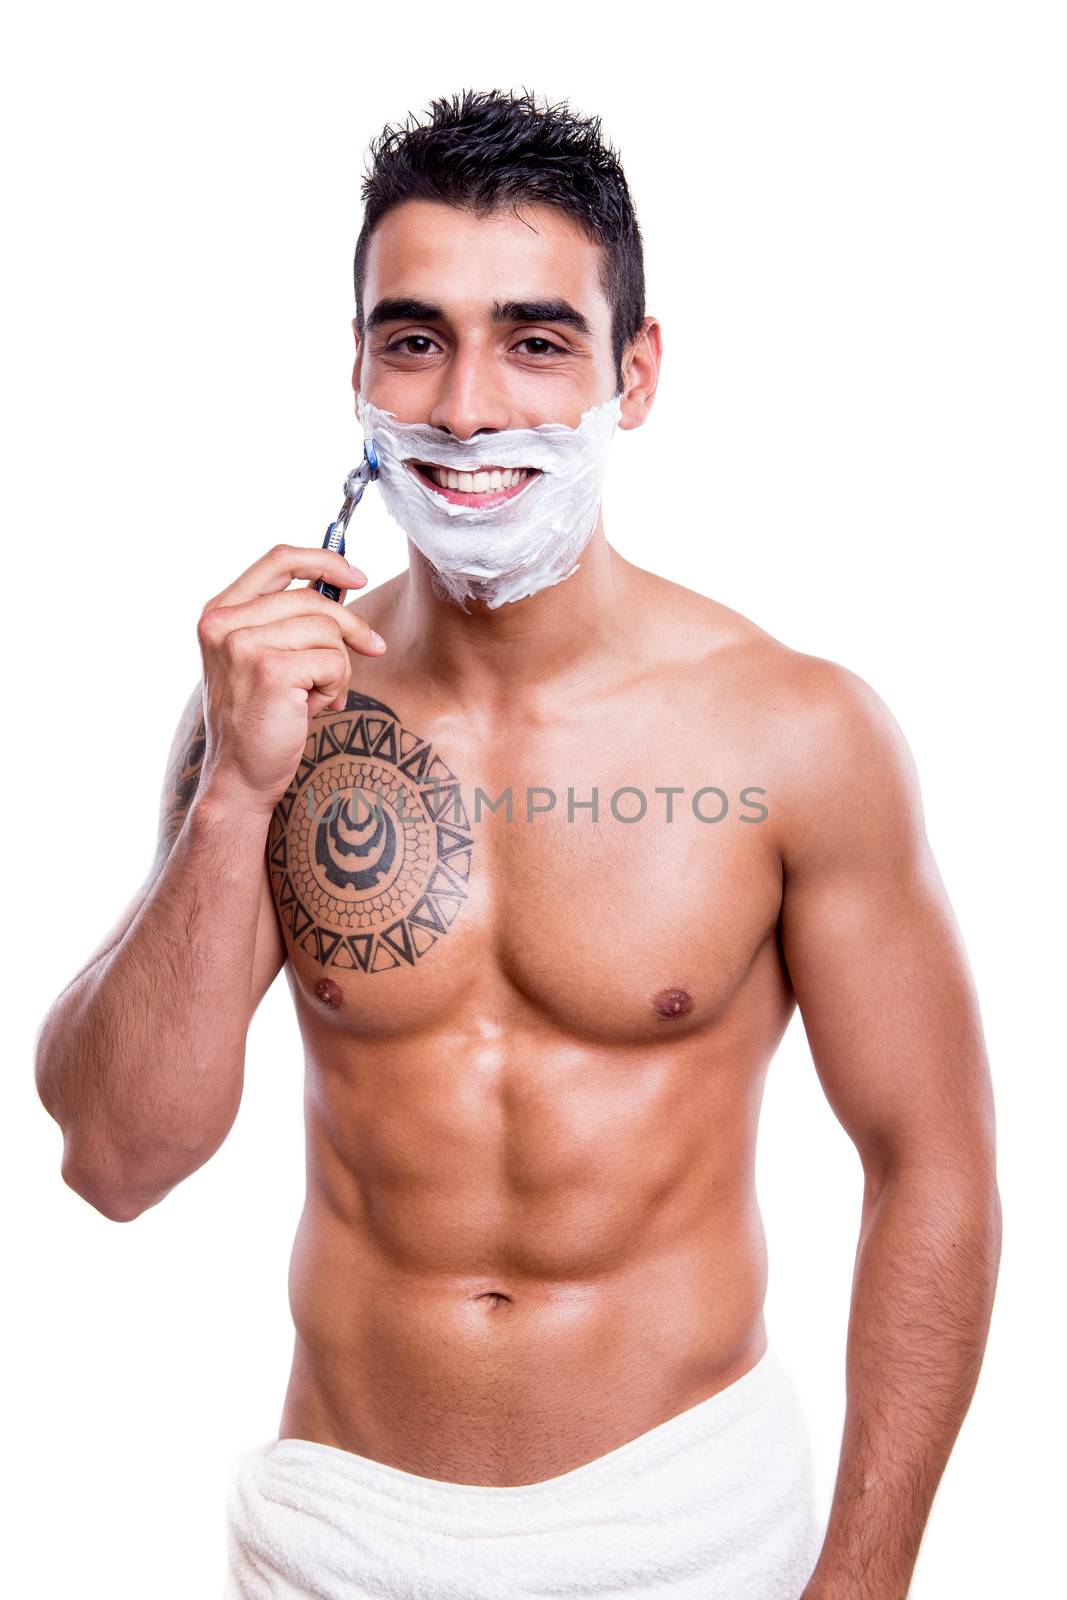 Man shaving his face over white background